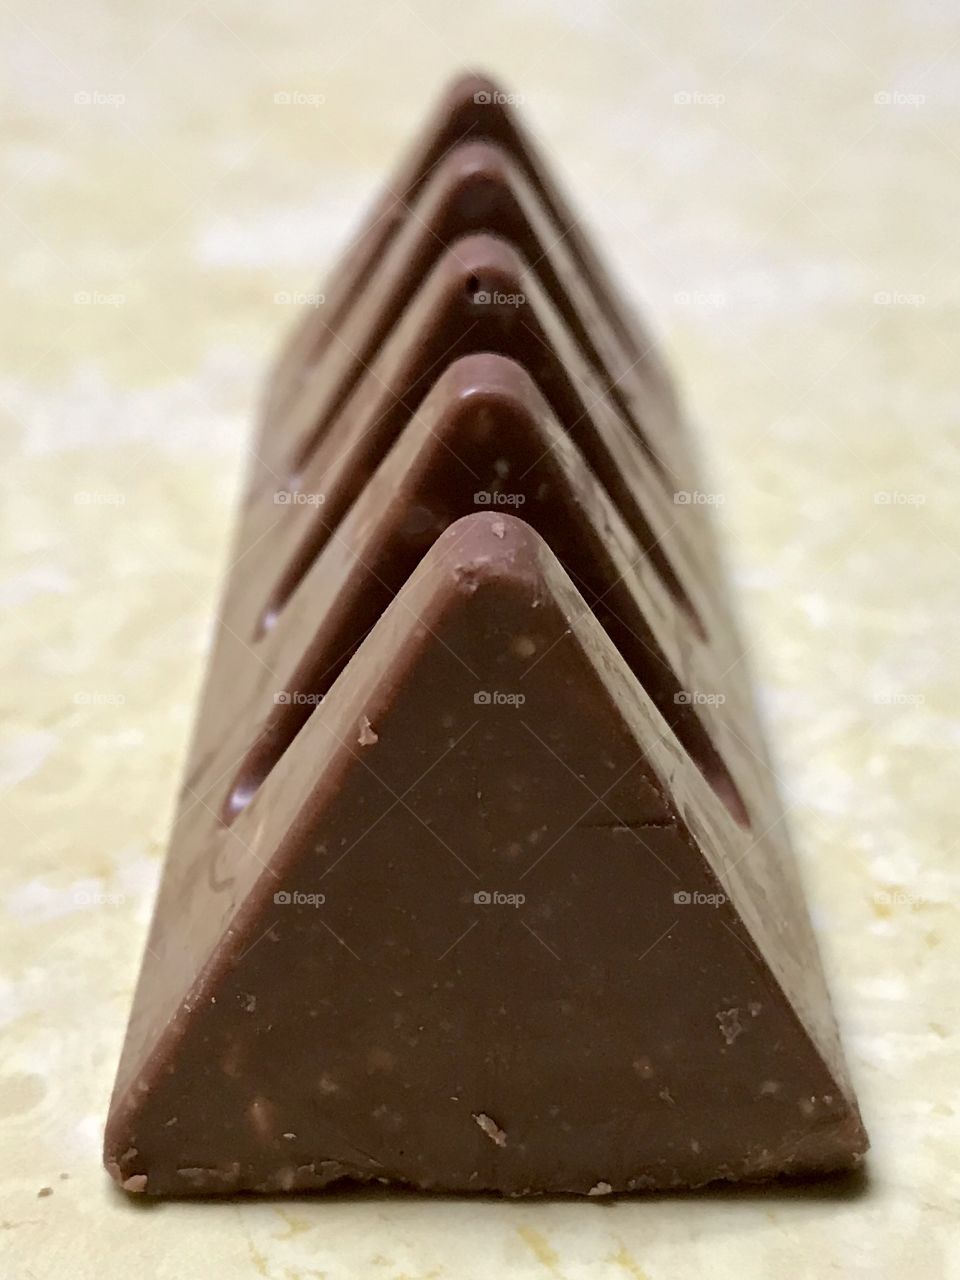 Chocolate candy bar 